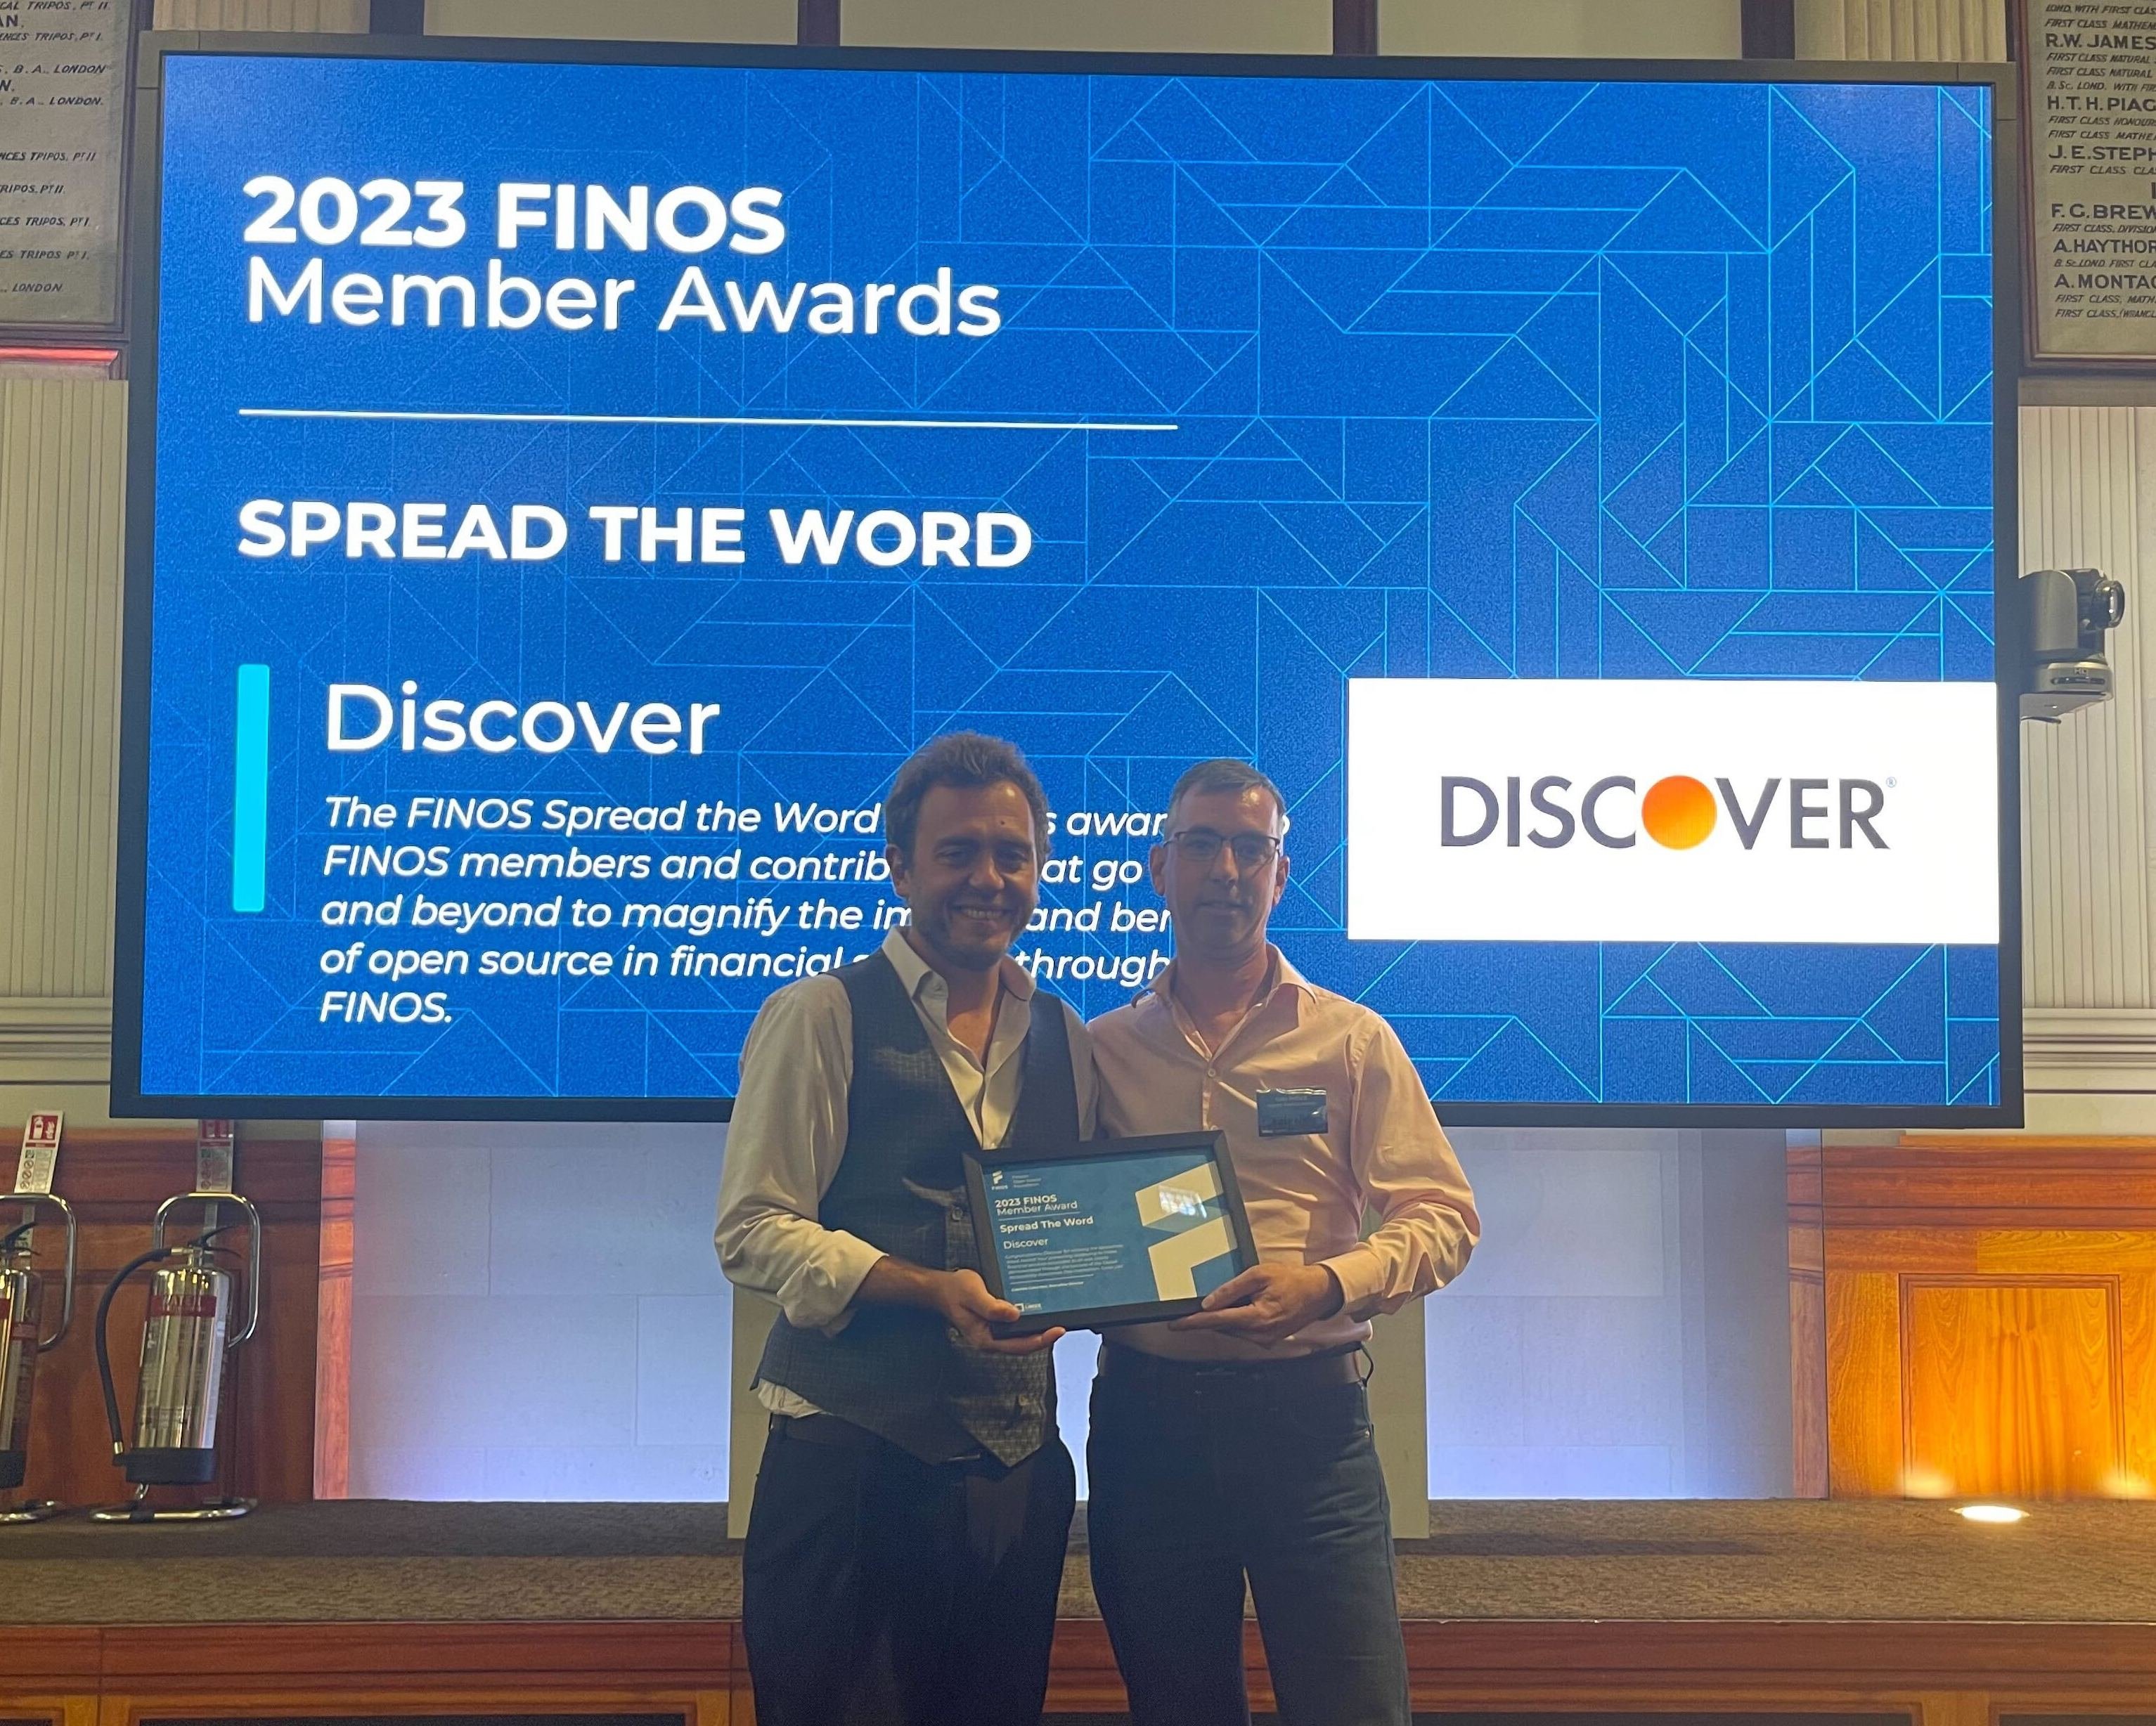 Discover 2023 Member Award